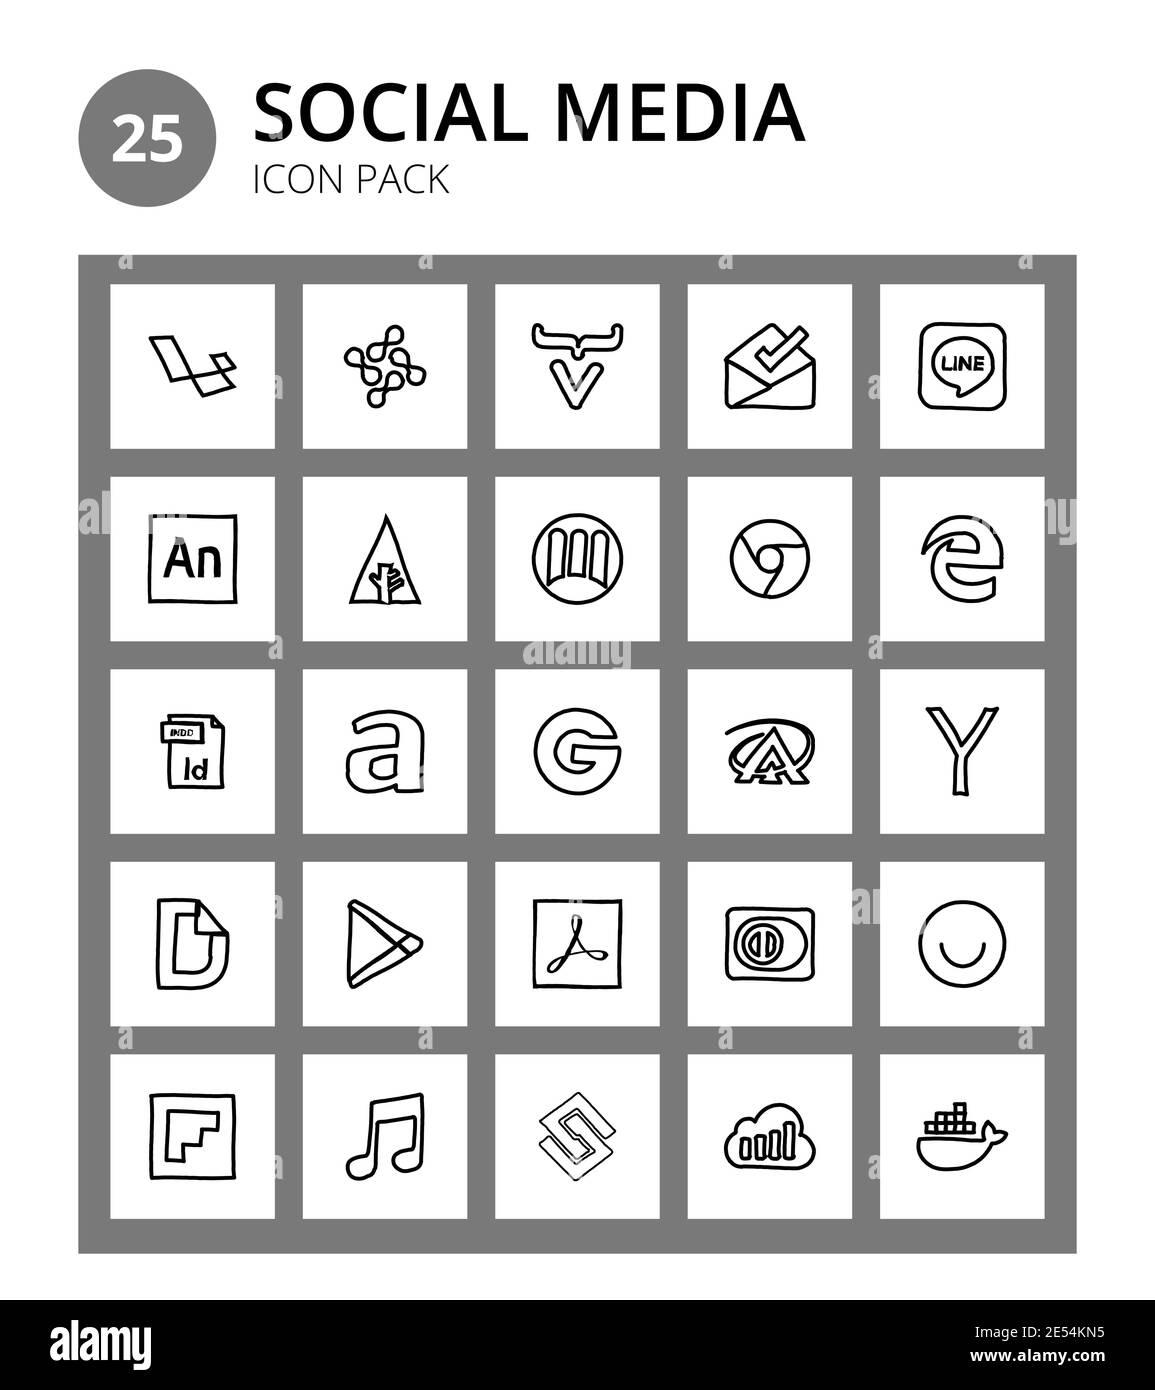 Social Media 25 icons yahoo, groupon, mizuni, amilia, indesign Editable Vector Design Elements Stock Vector